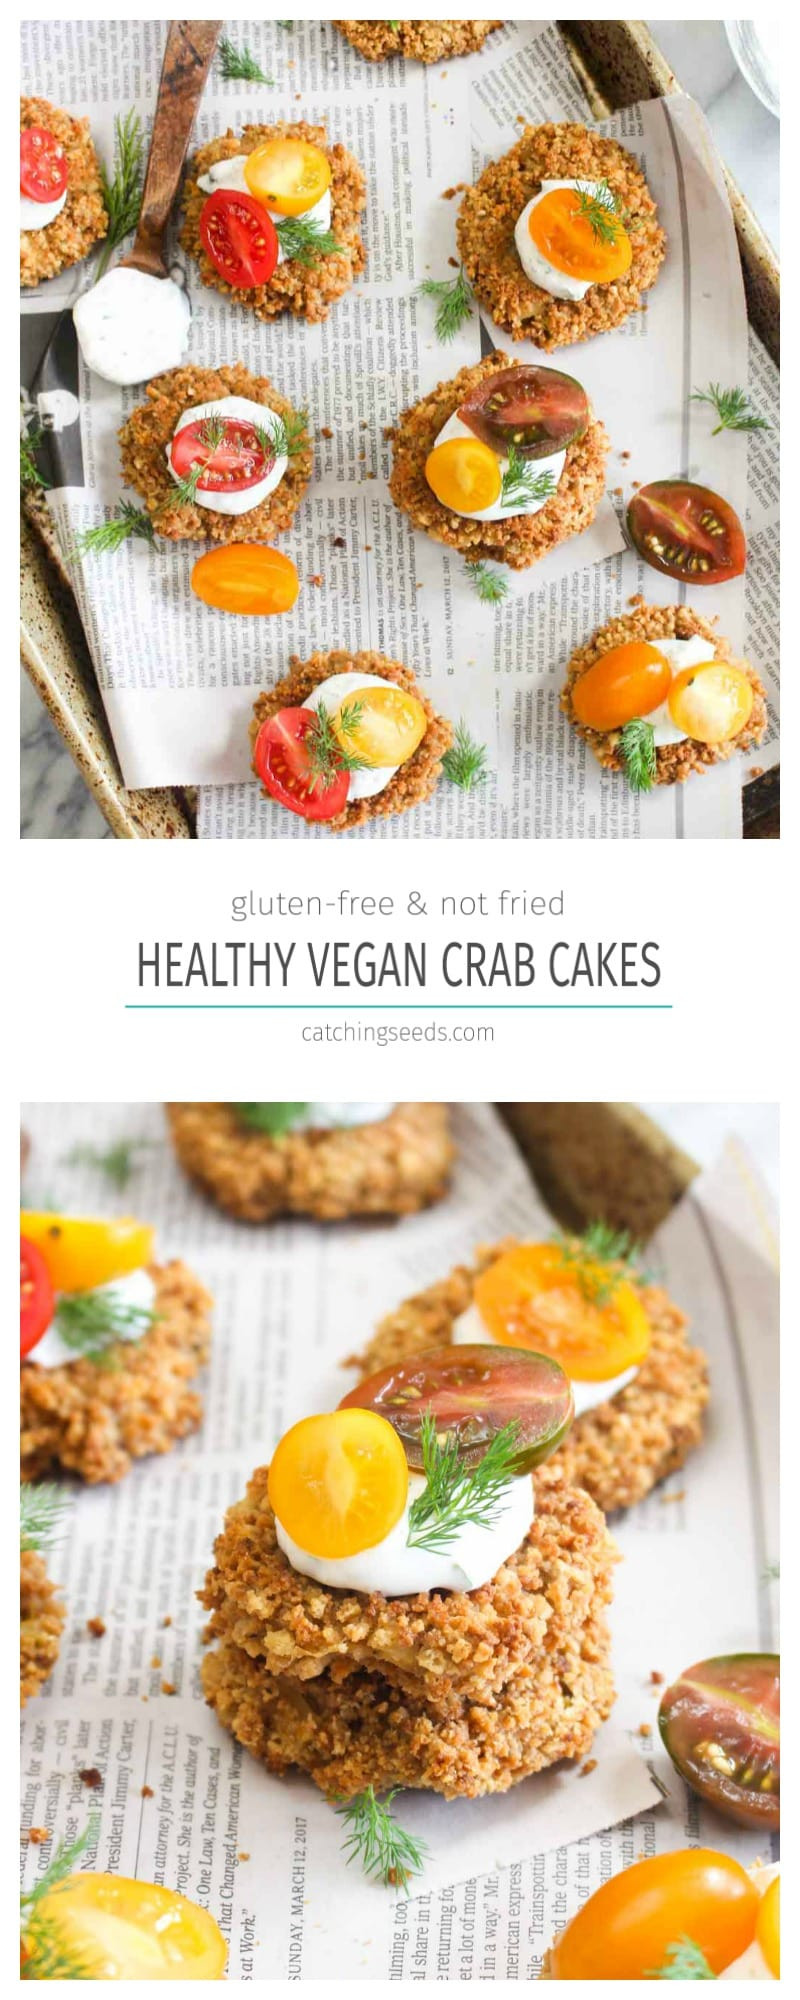 Vegan Crab Cake Recipe
 Vegan Crab Cakes with Herbed Yogurt Sauce